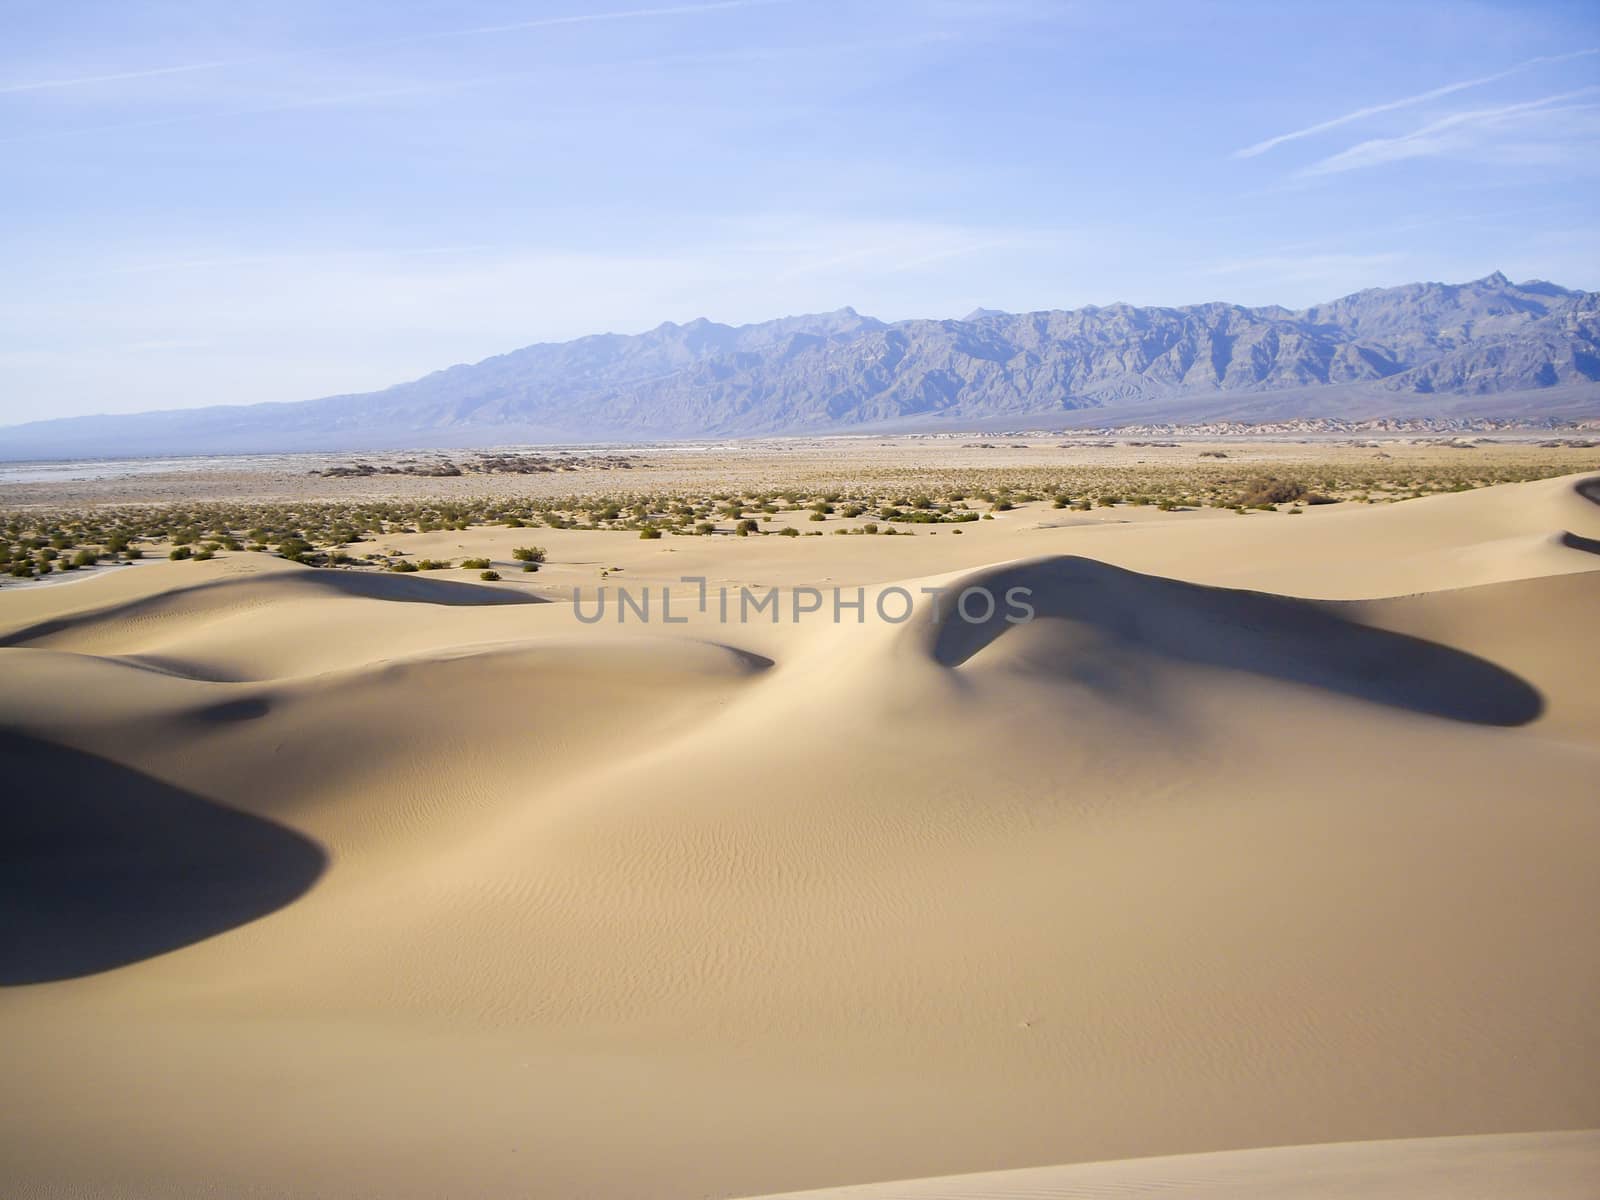 Shadows on Death Valley Dunes by emattil